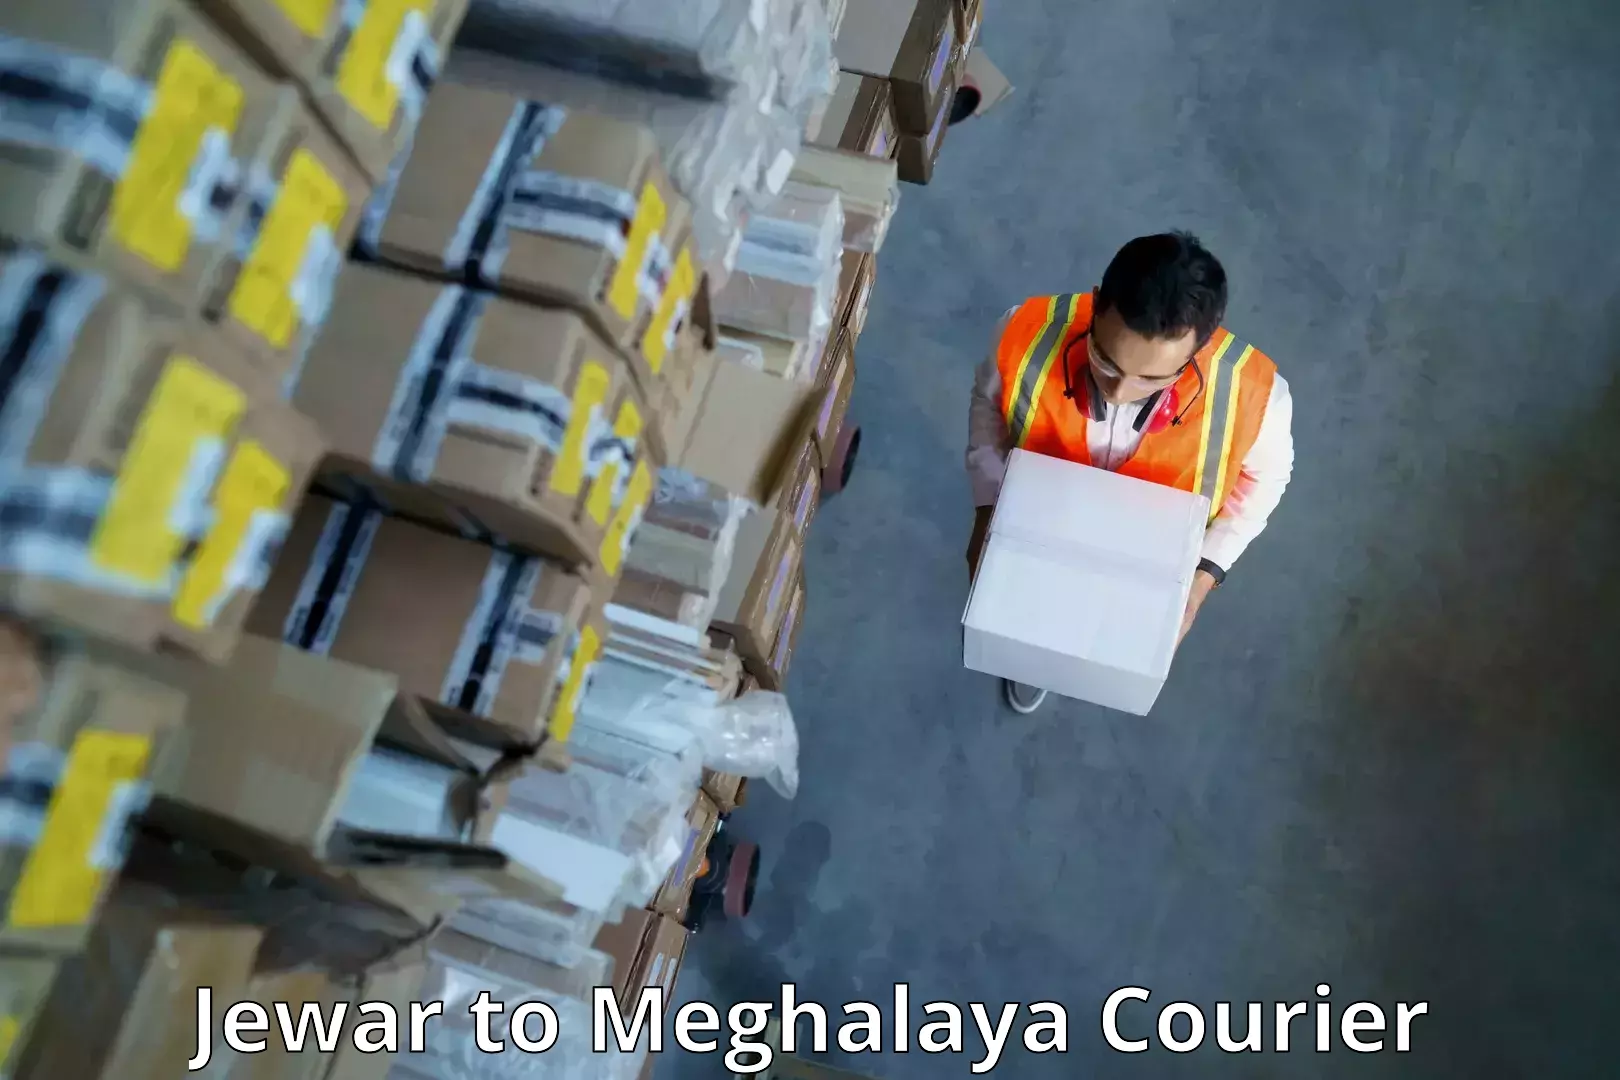 Full-service courier options Jewar to Meghalaya